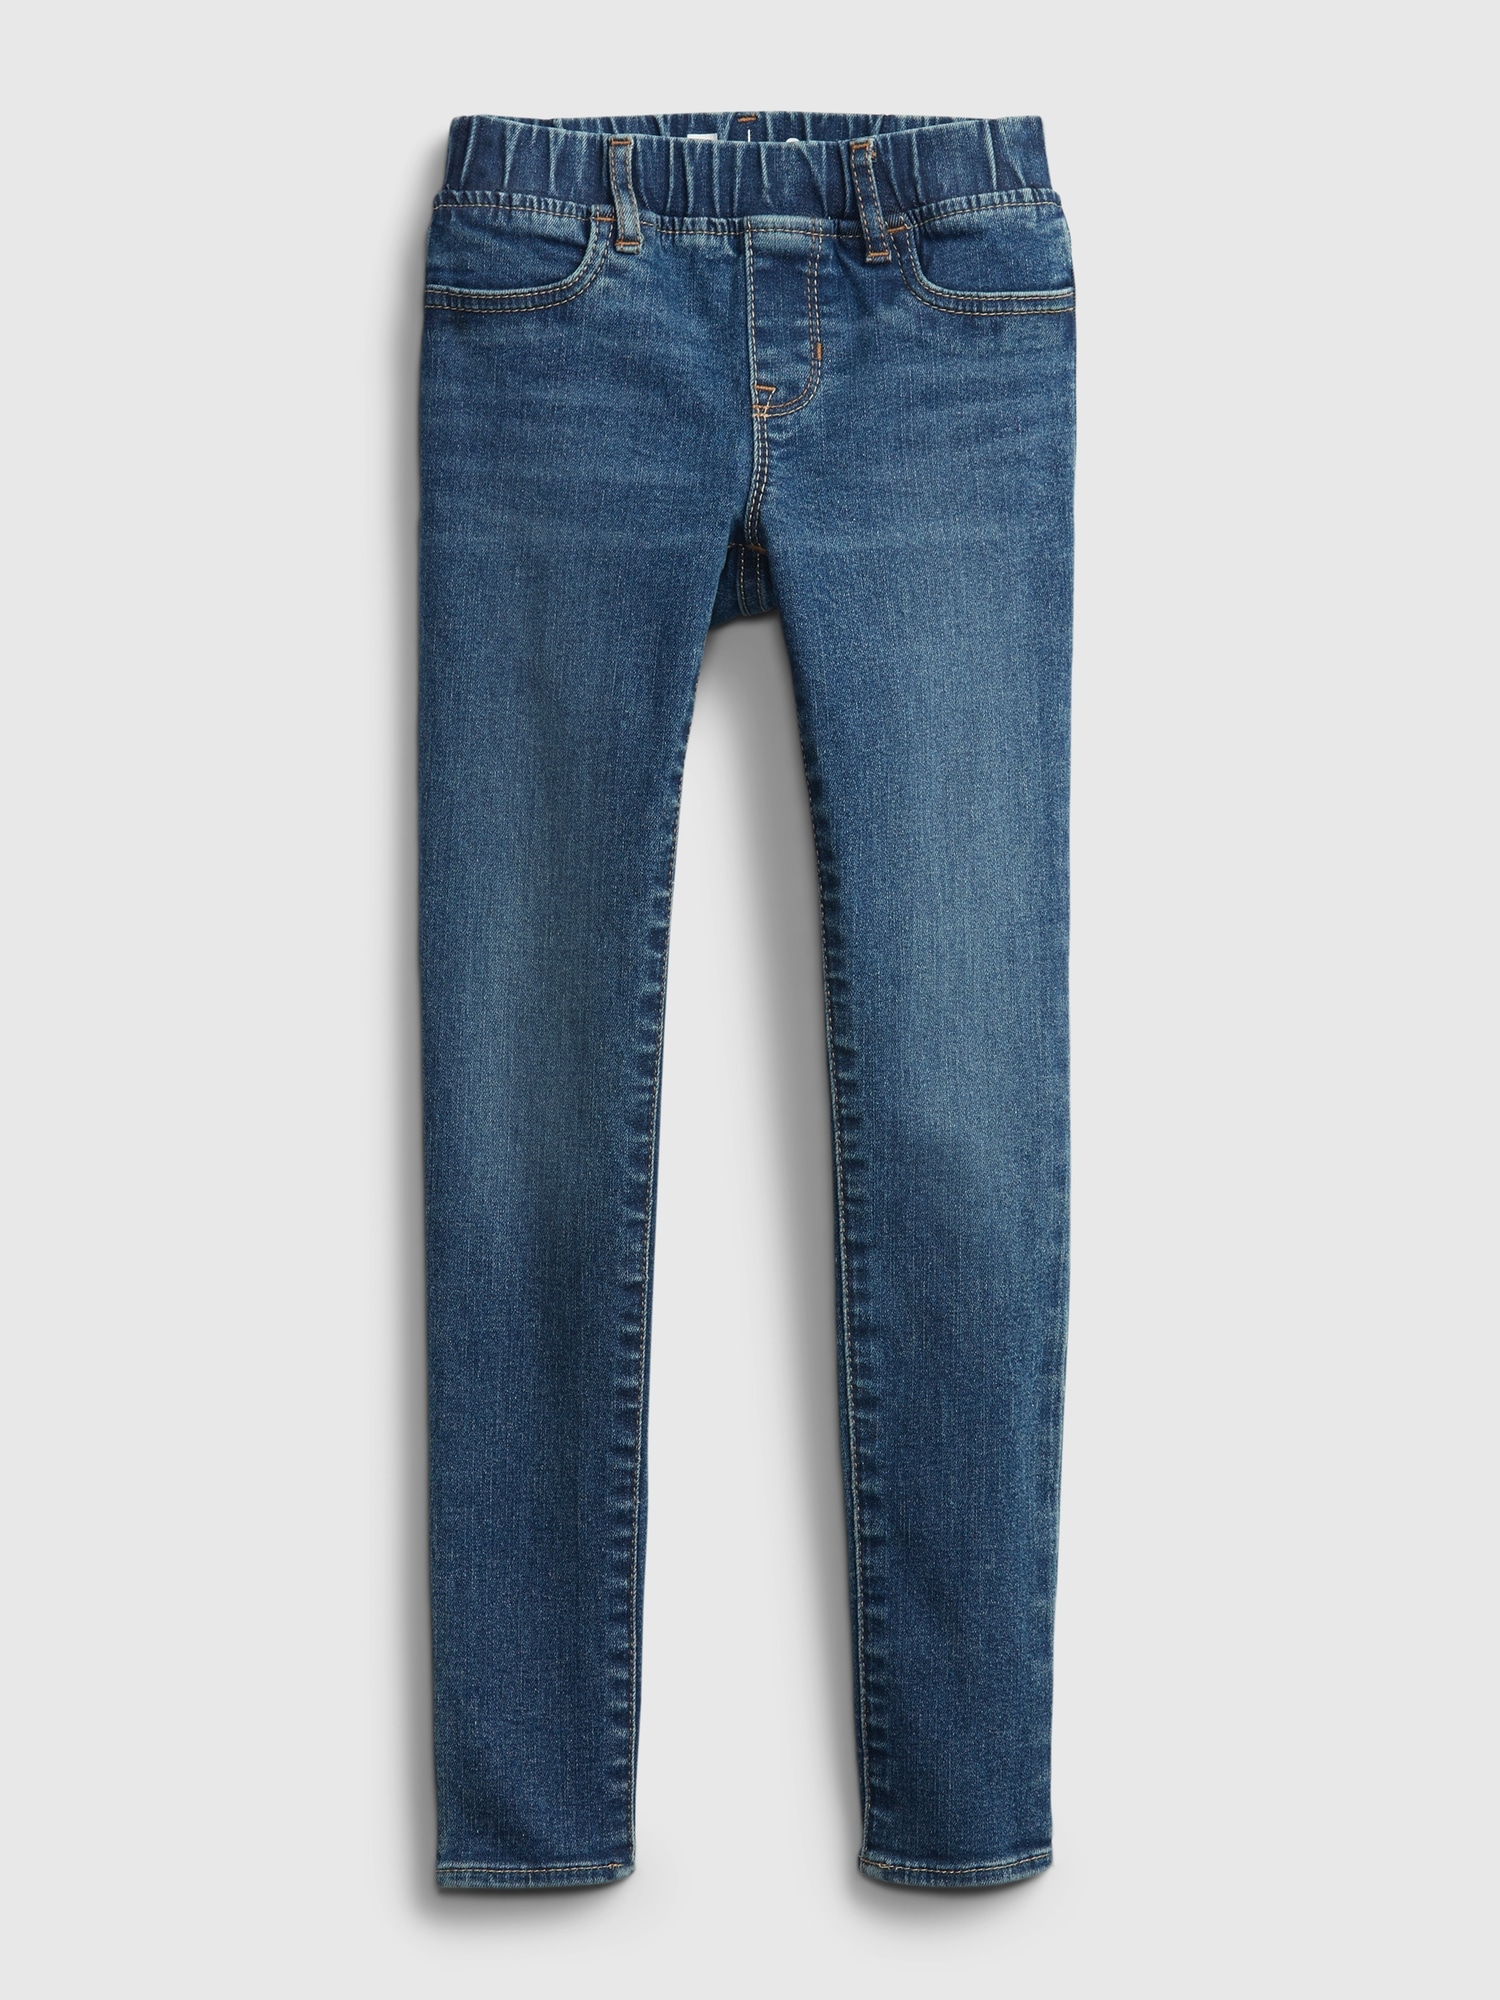 njshnmn Women's Plus Size The No-Gap Jegging Pull On Jeans Denim